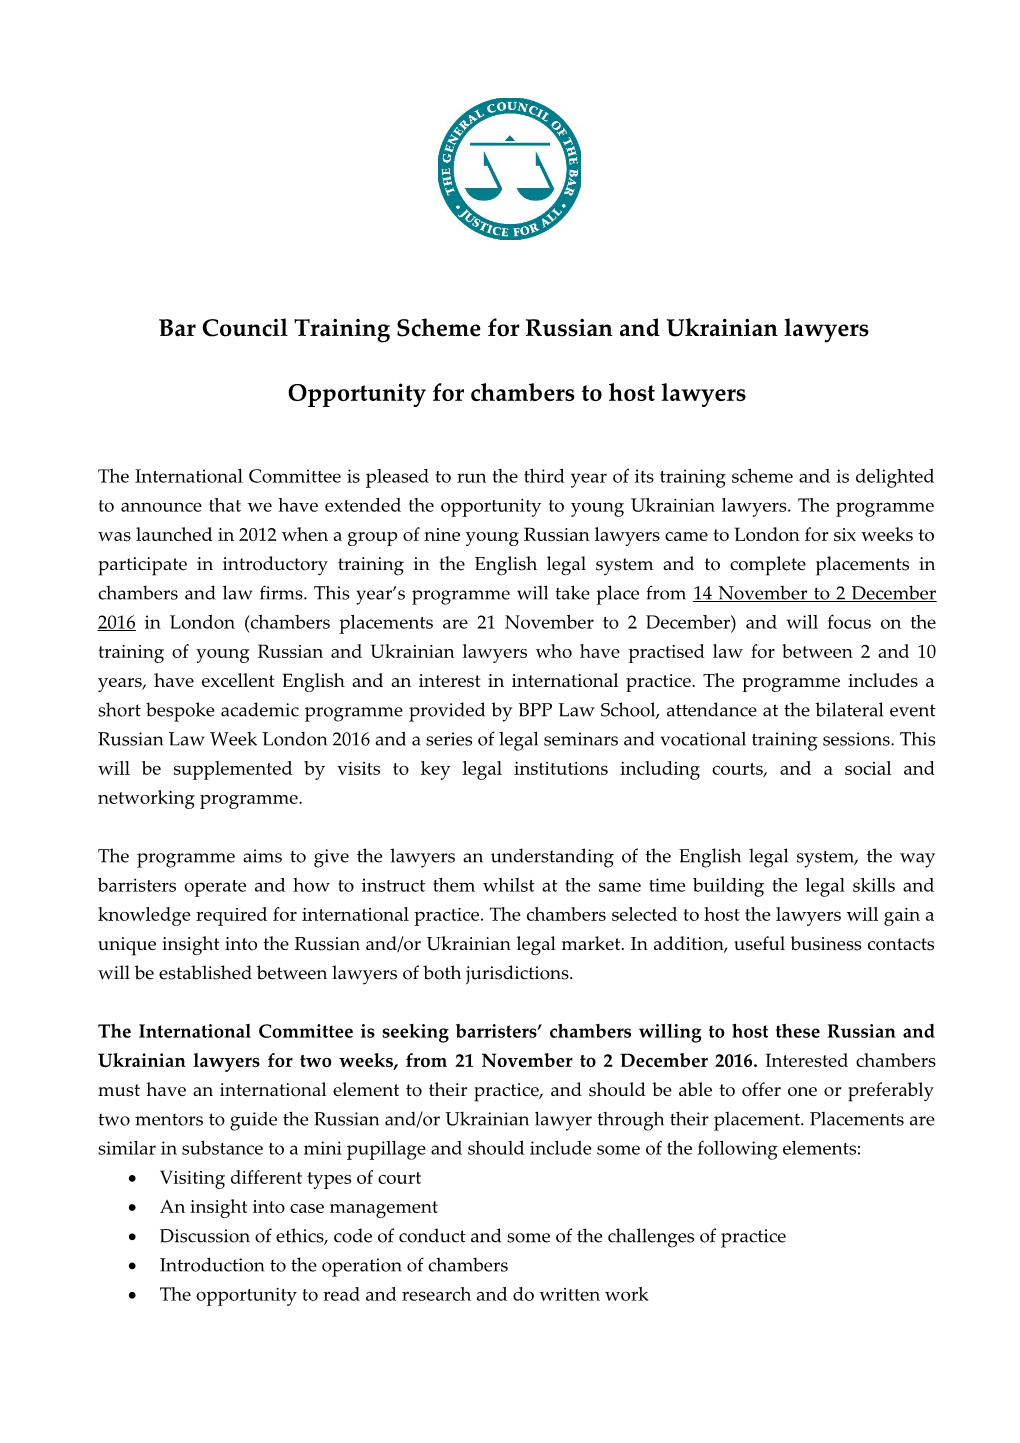 Bar Council Training Scheme for Russian and Ukrainian Lawyers